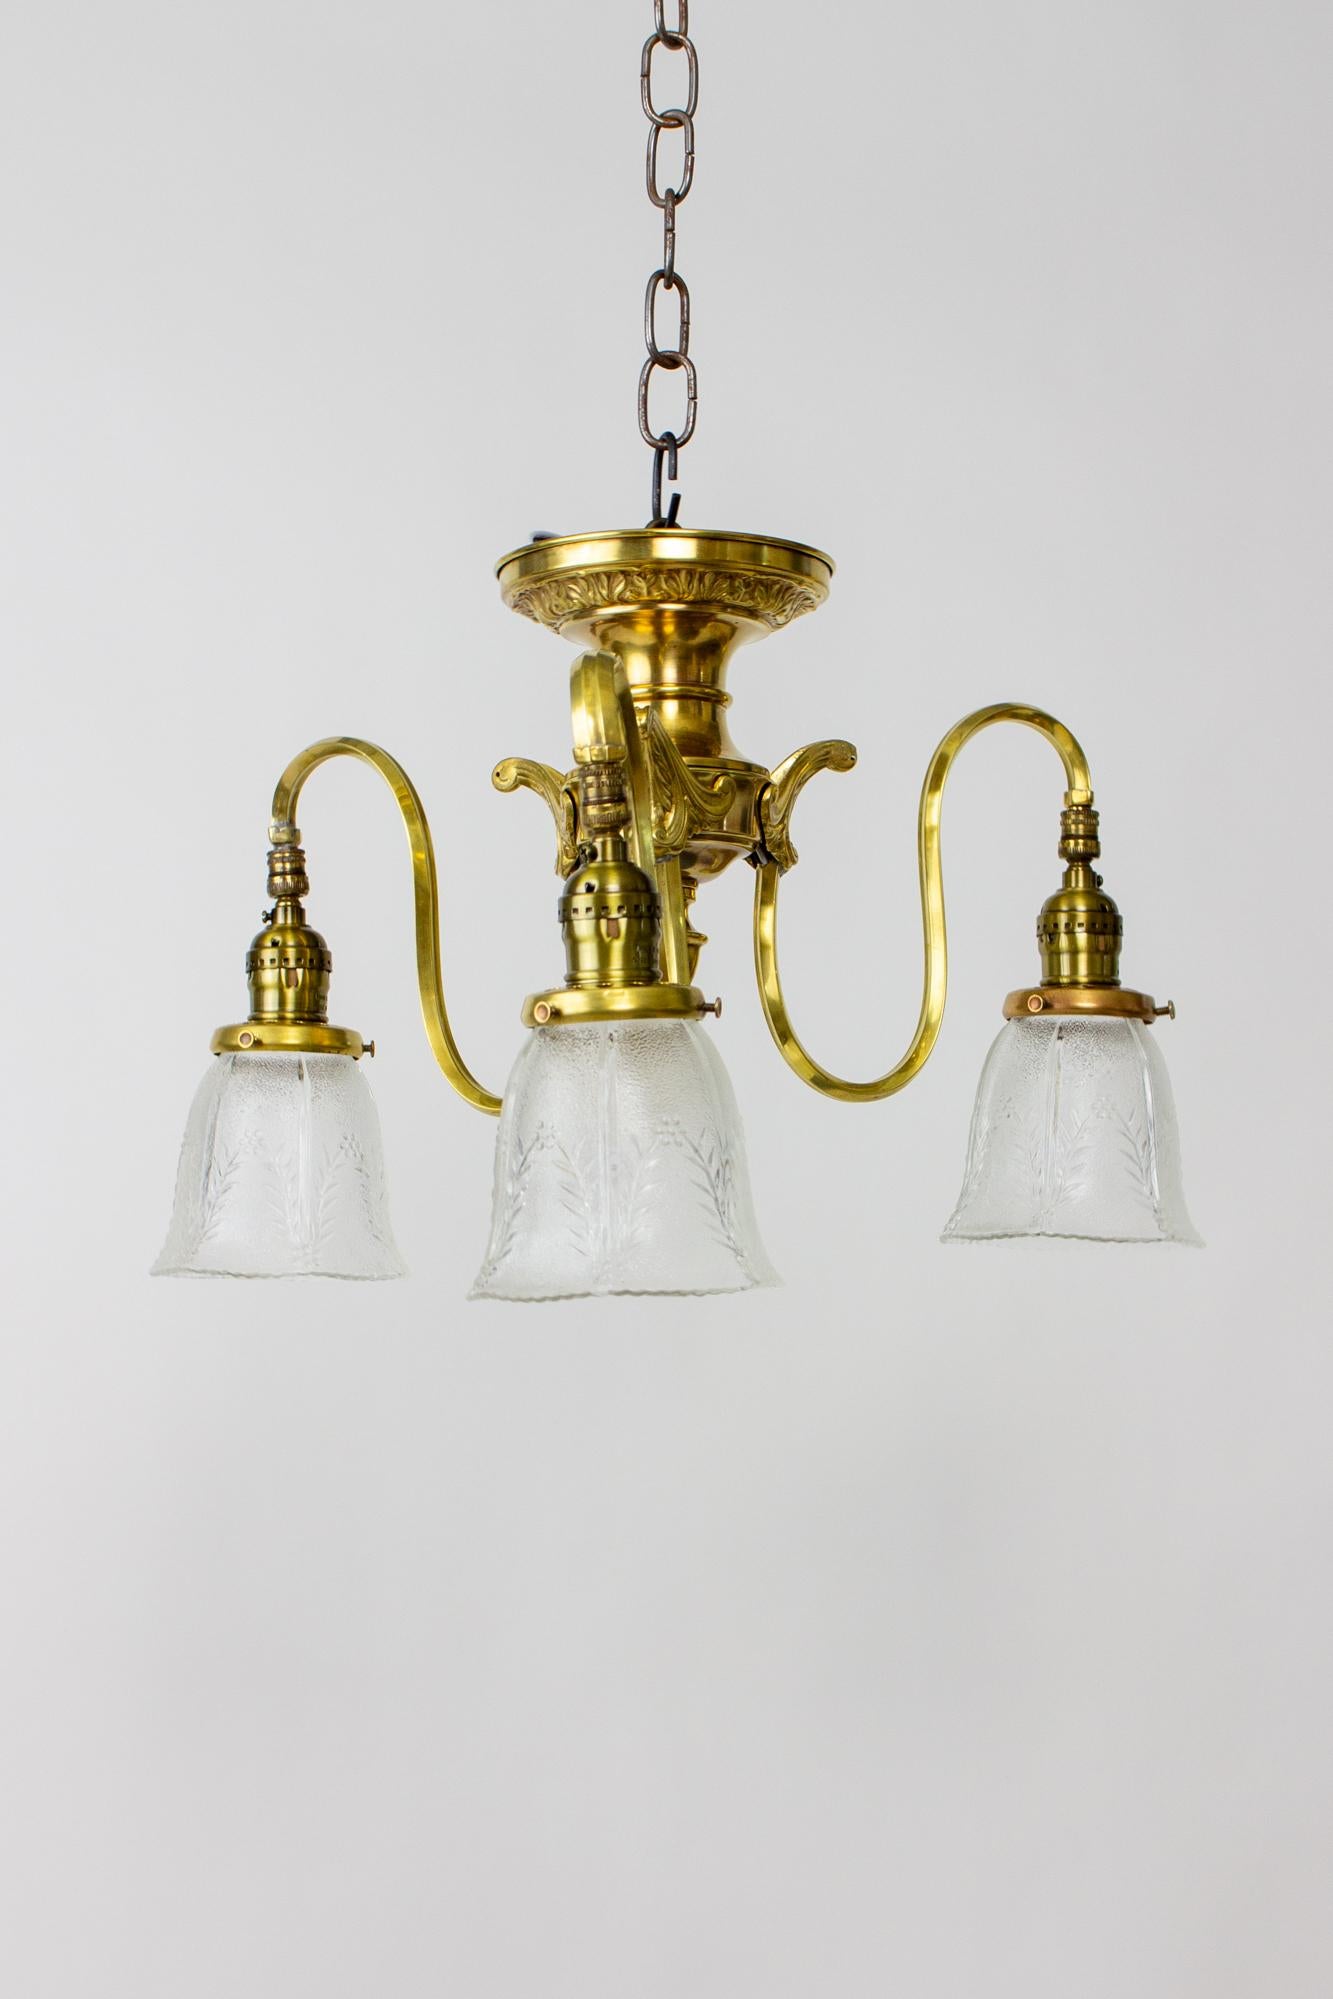 Brass Early 20th Century Three Light Prismatic Semi Flush Fixture For Sale